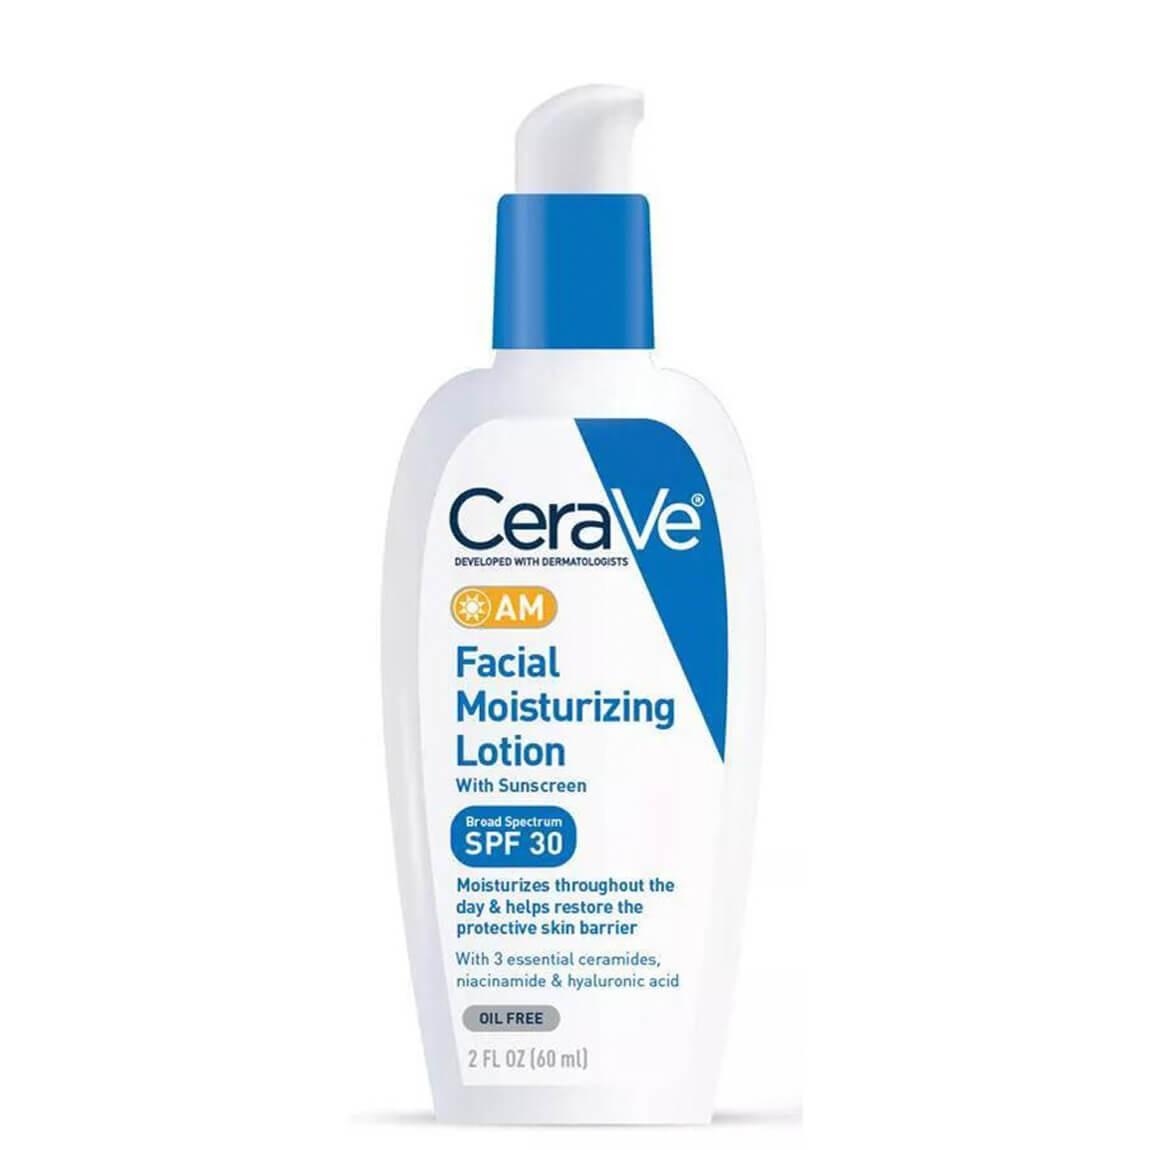 Cerave AM Facial Moisturizing Lotion SPF 30 (60ml)